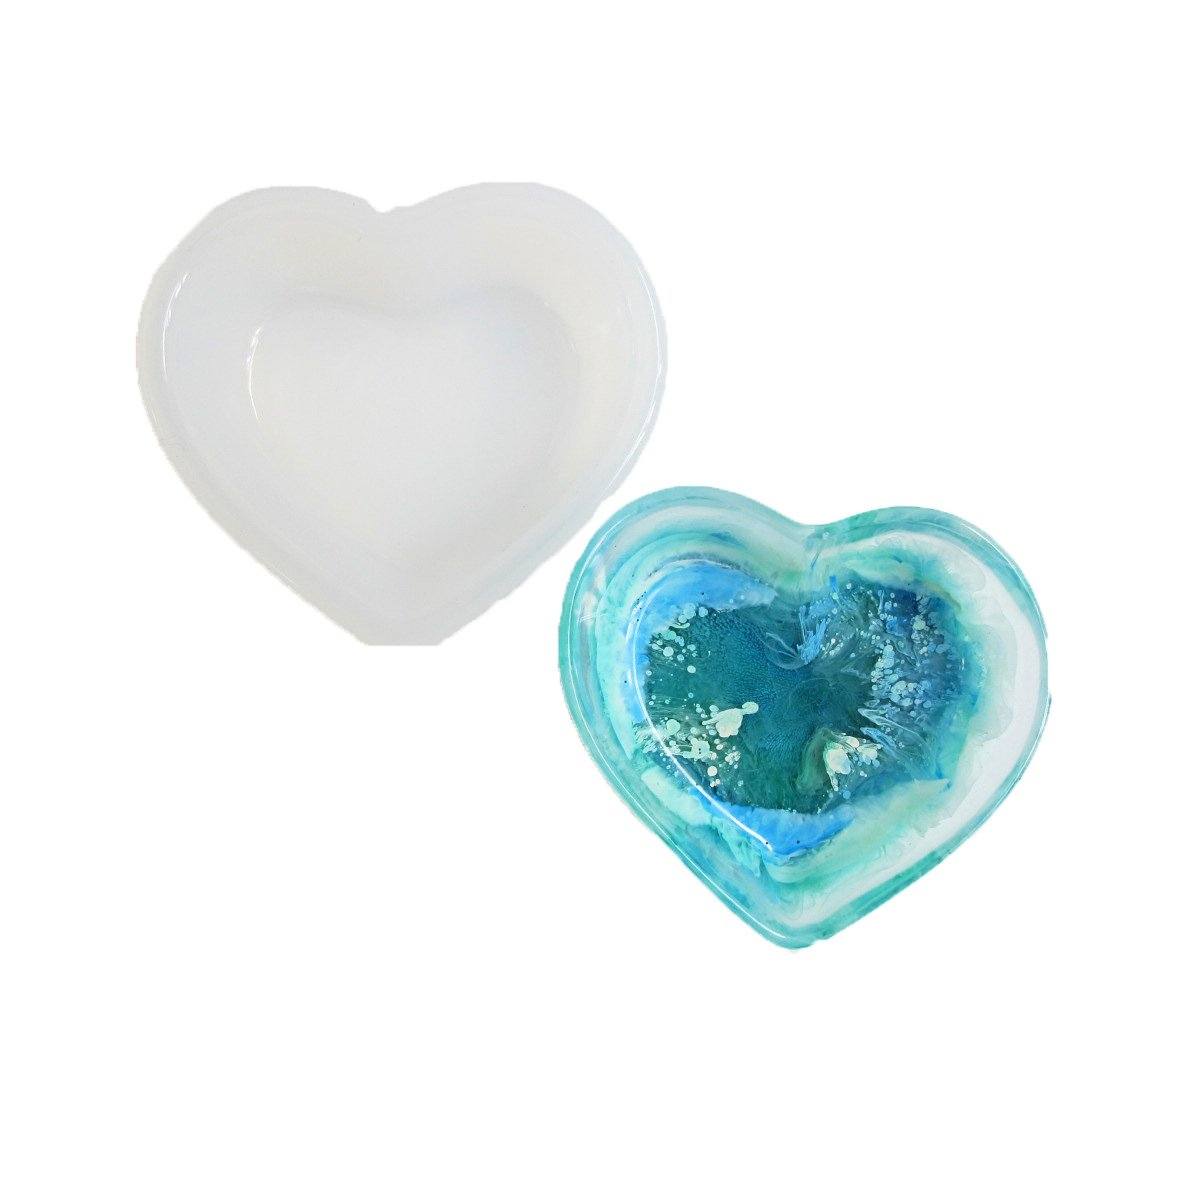 Heart bowl reusable silicone mold - make heart shaped resin bowls